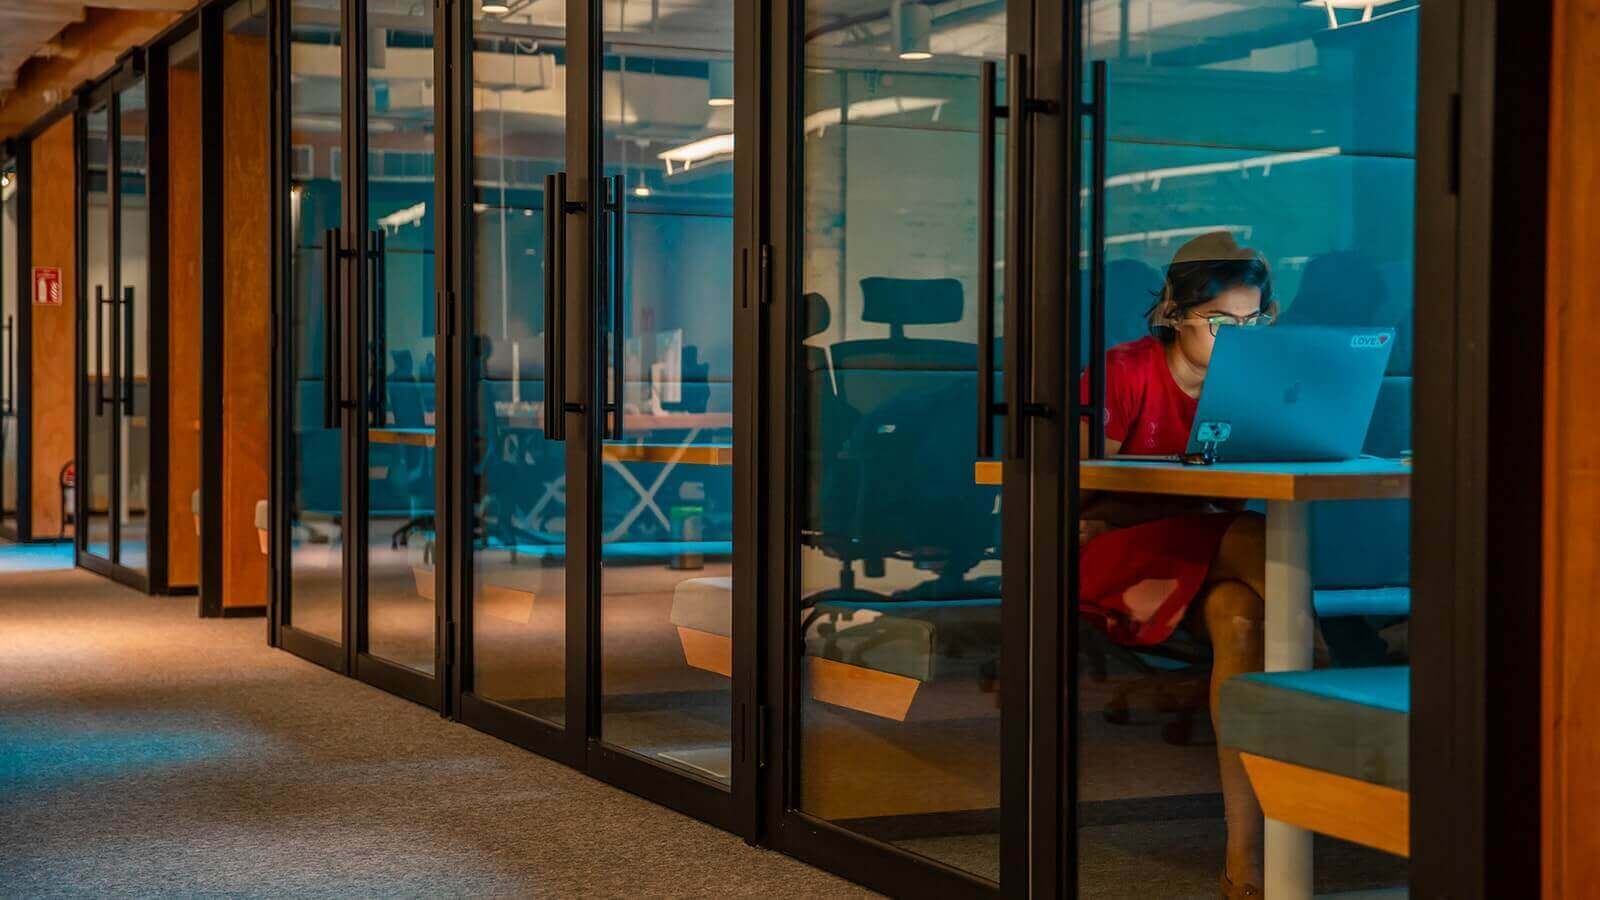 Ride-Hailing Giant Gojek Acquires POS Startup Moka For $130 Million